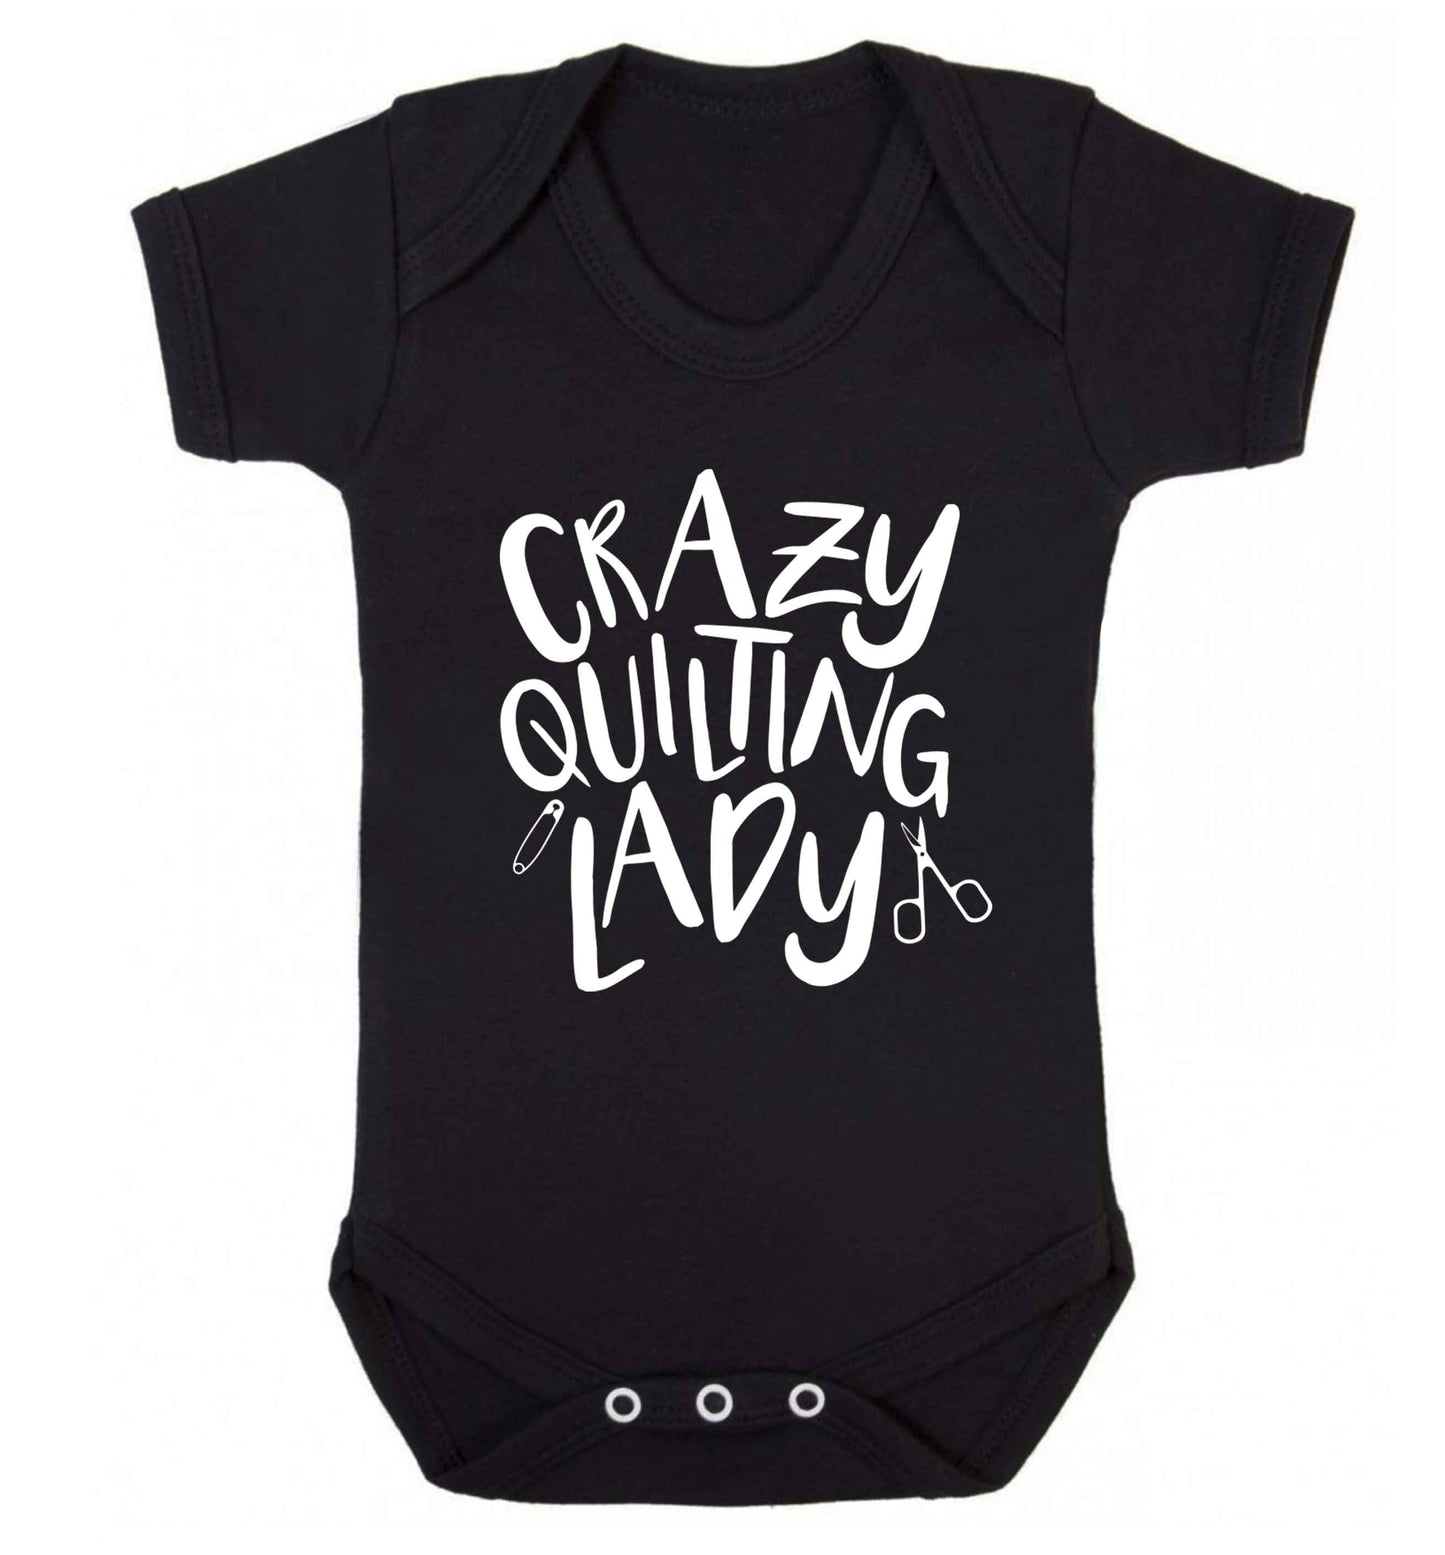 Crazy quilting lady Baby Vest black 18-24 months